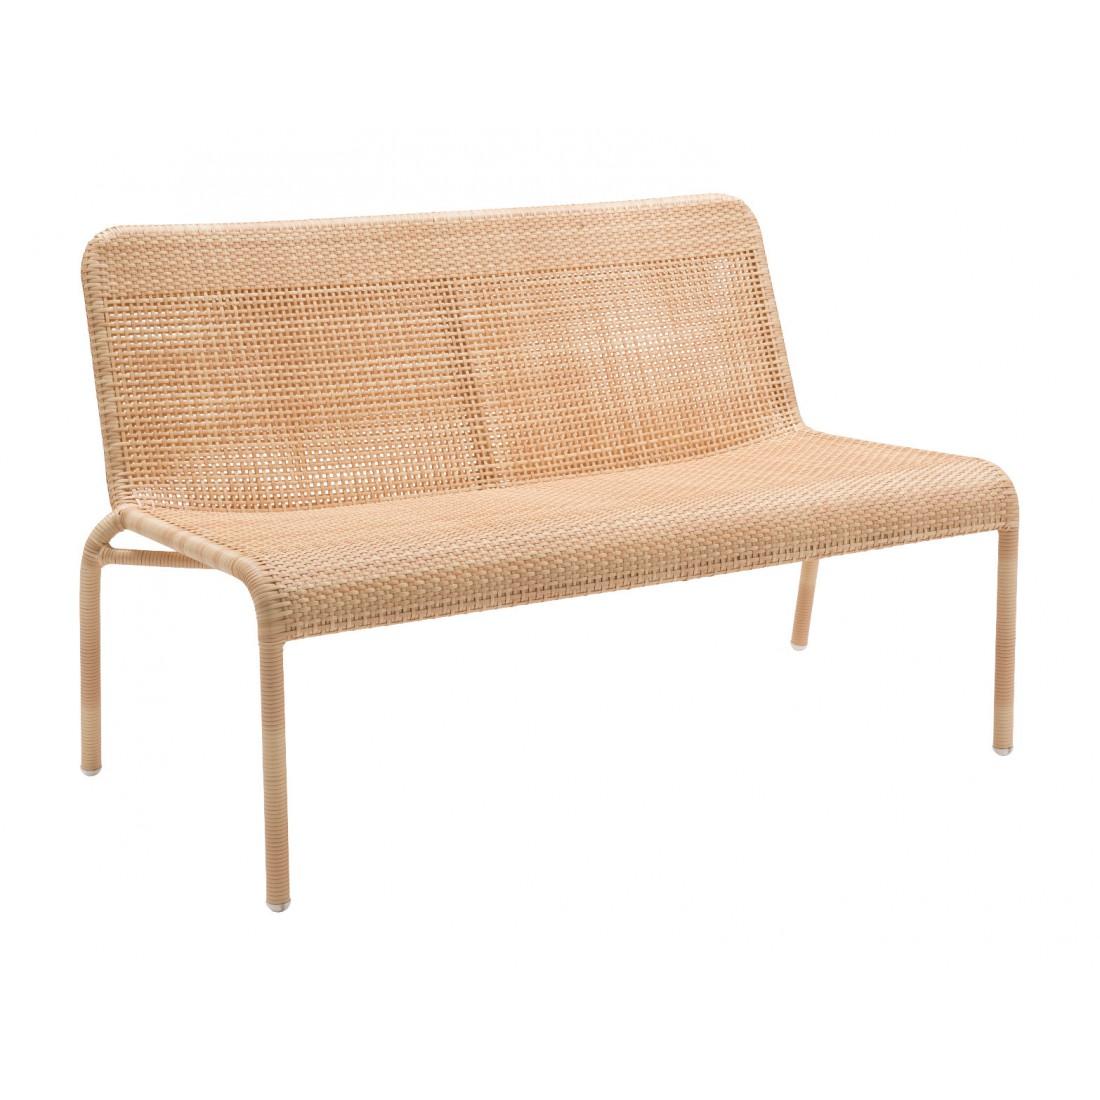 Mid-Century Modern Rattan Braided Resin French Design Outdoor Sofa